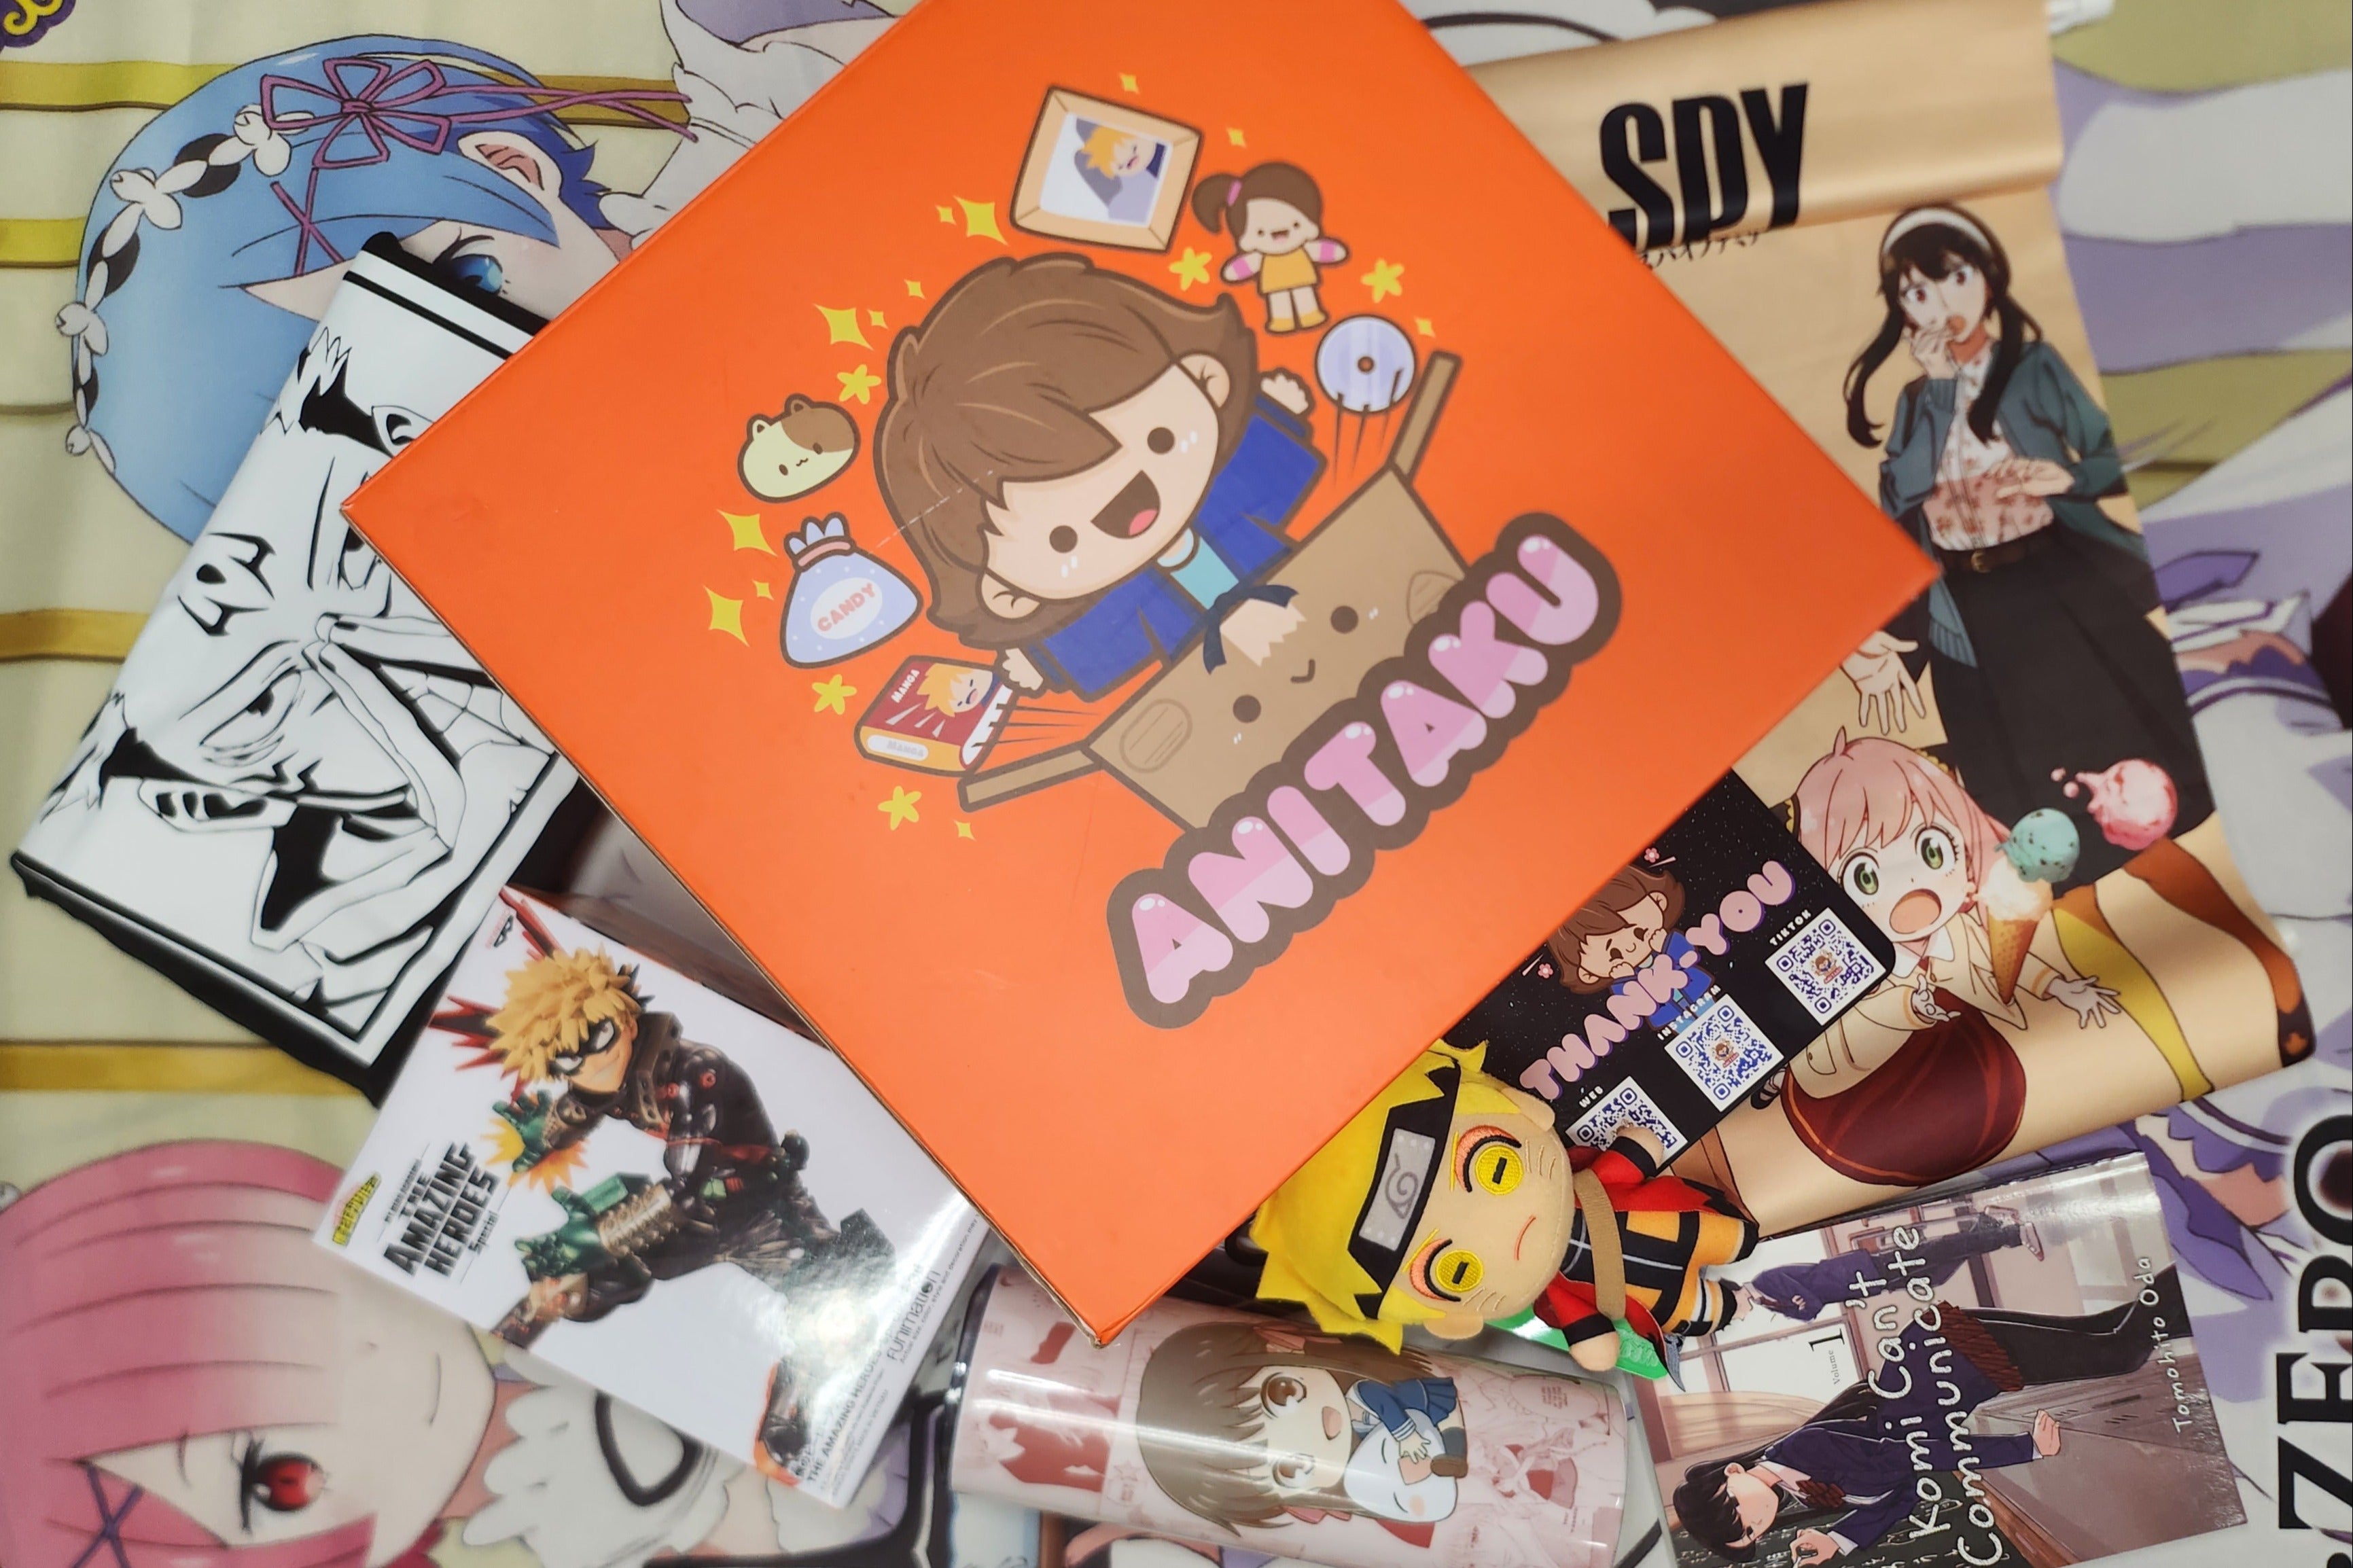 Anitaku - Watch anime online with English sub for free